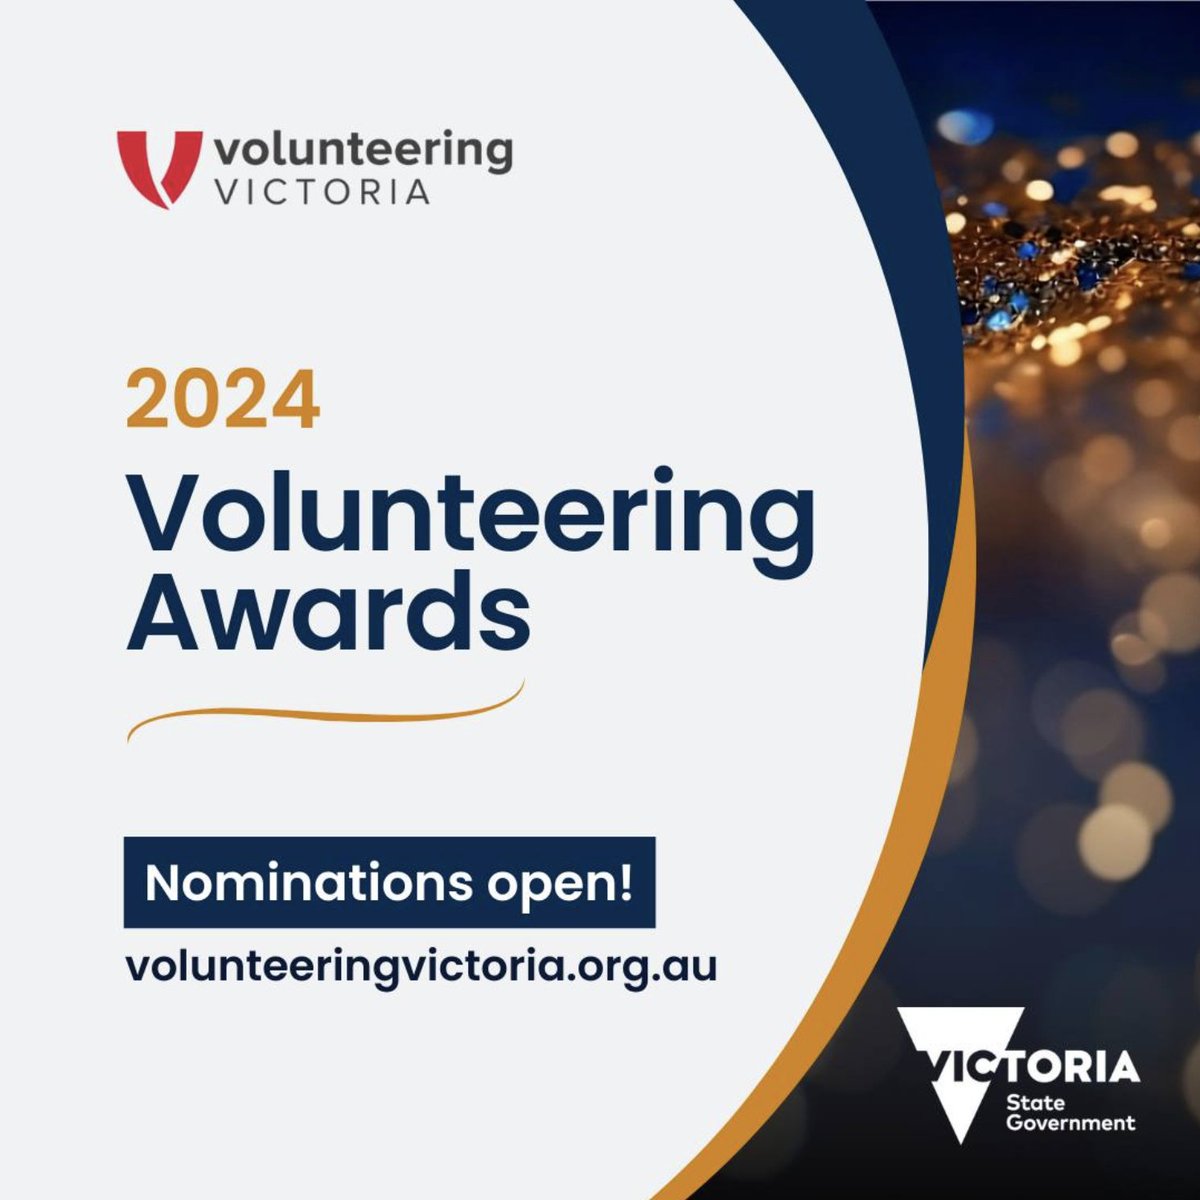 #VolunteeringAwards 2024: Here’s your chance to be a community hero across #Victoria Read Here: theaustraliatoday.com.au/volunteering-a… @DrAmitSarwal @Pallavi_Aus @ShailendraBSing @SarahLGates1 @Rohini_indo_aus @dhanashree0110 @Lisa_Singh @shebatweets @JacintaAllanMP @IngridStitt @VivNguyenVMC